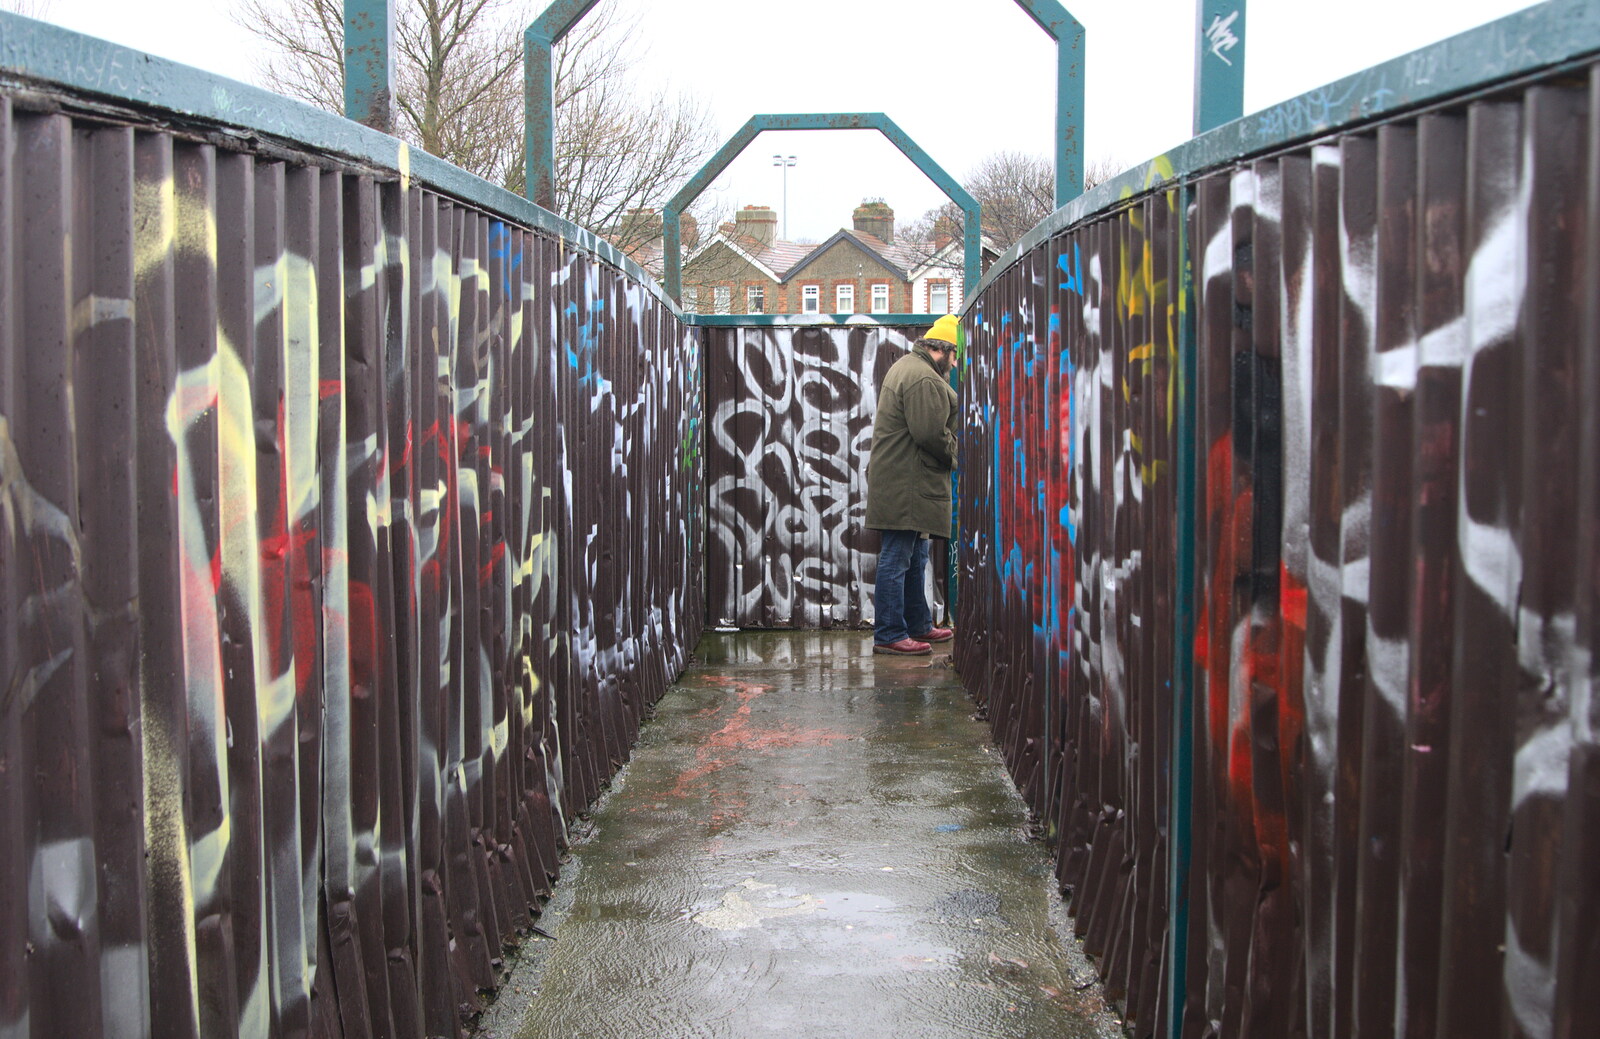 Noddy heads back of Graffiti Bridge from Christmas in Blackrock and St. Stephen's in Ballybrack, Dublin, Ireland - 25th December 2015